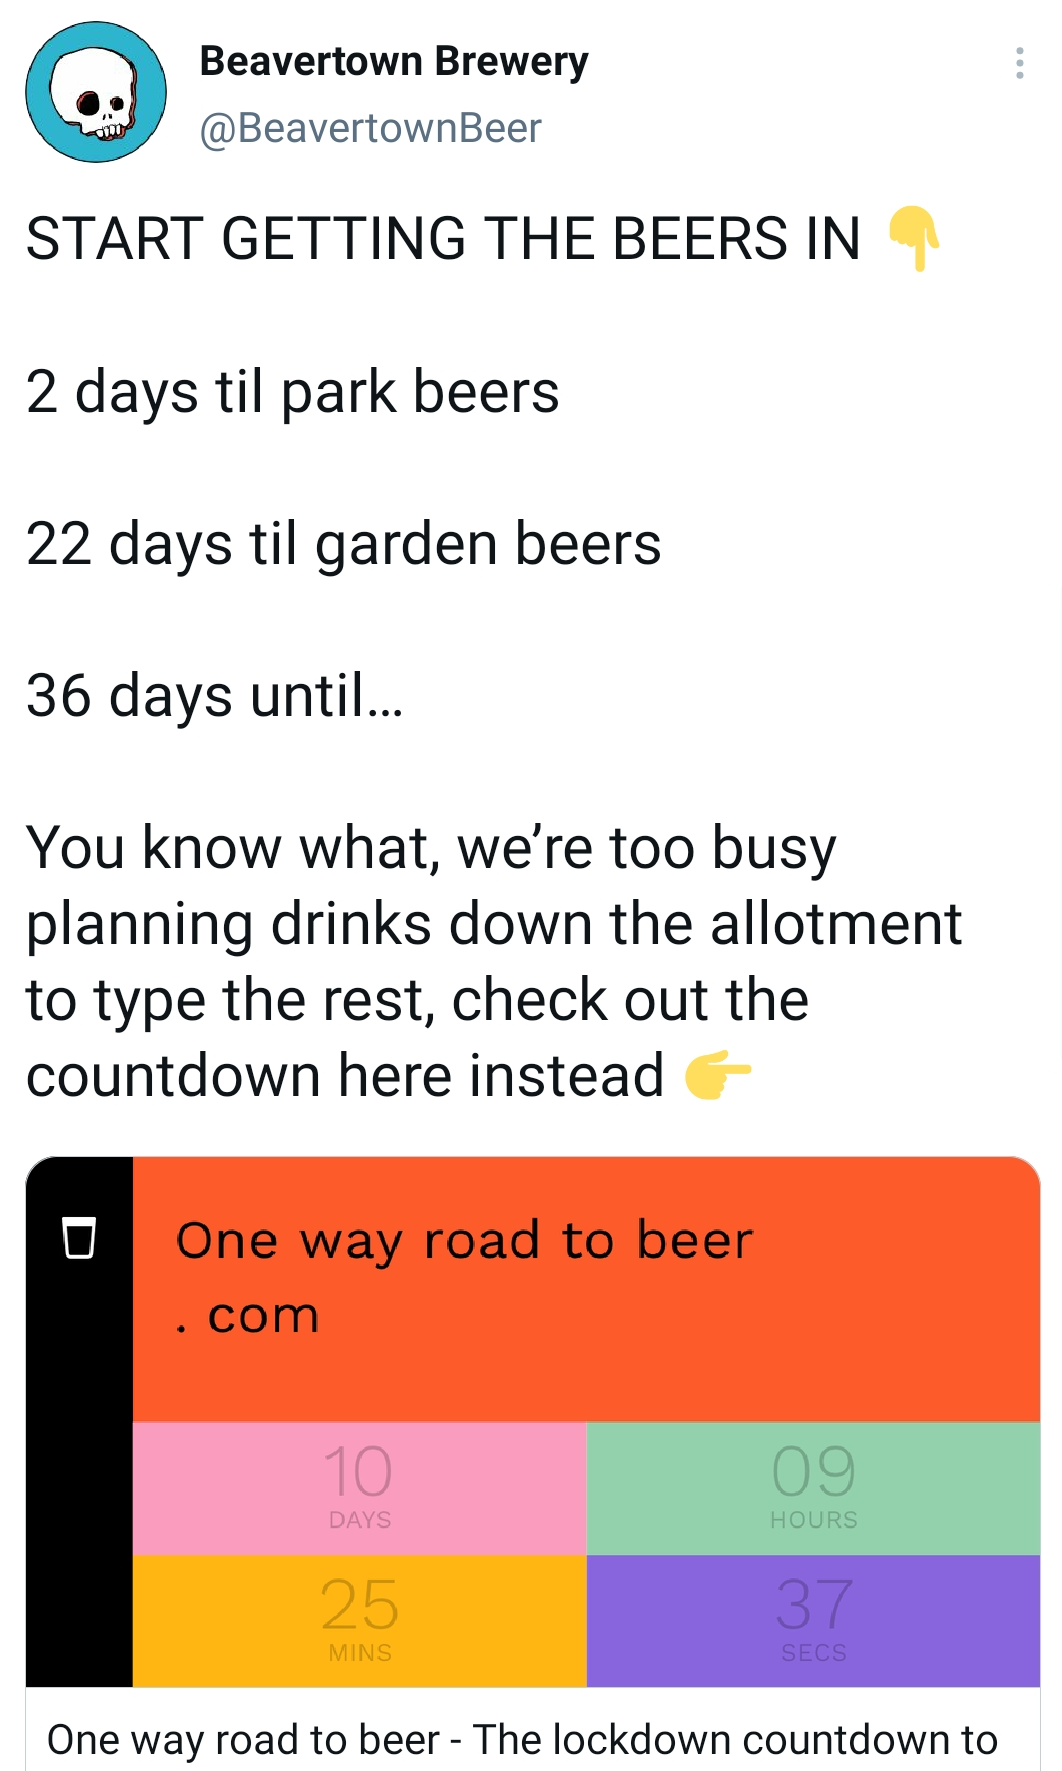 A tweet from Beavertown - Start getting the beers in - linking to onewayroadtobeer.com